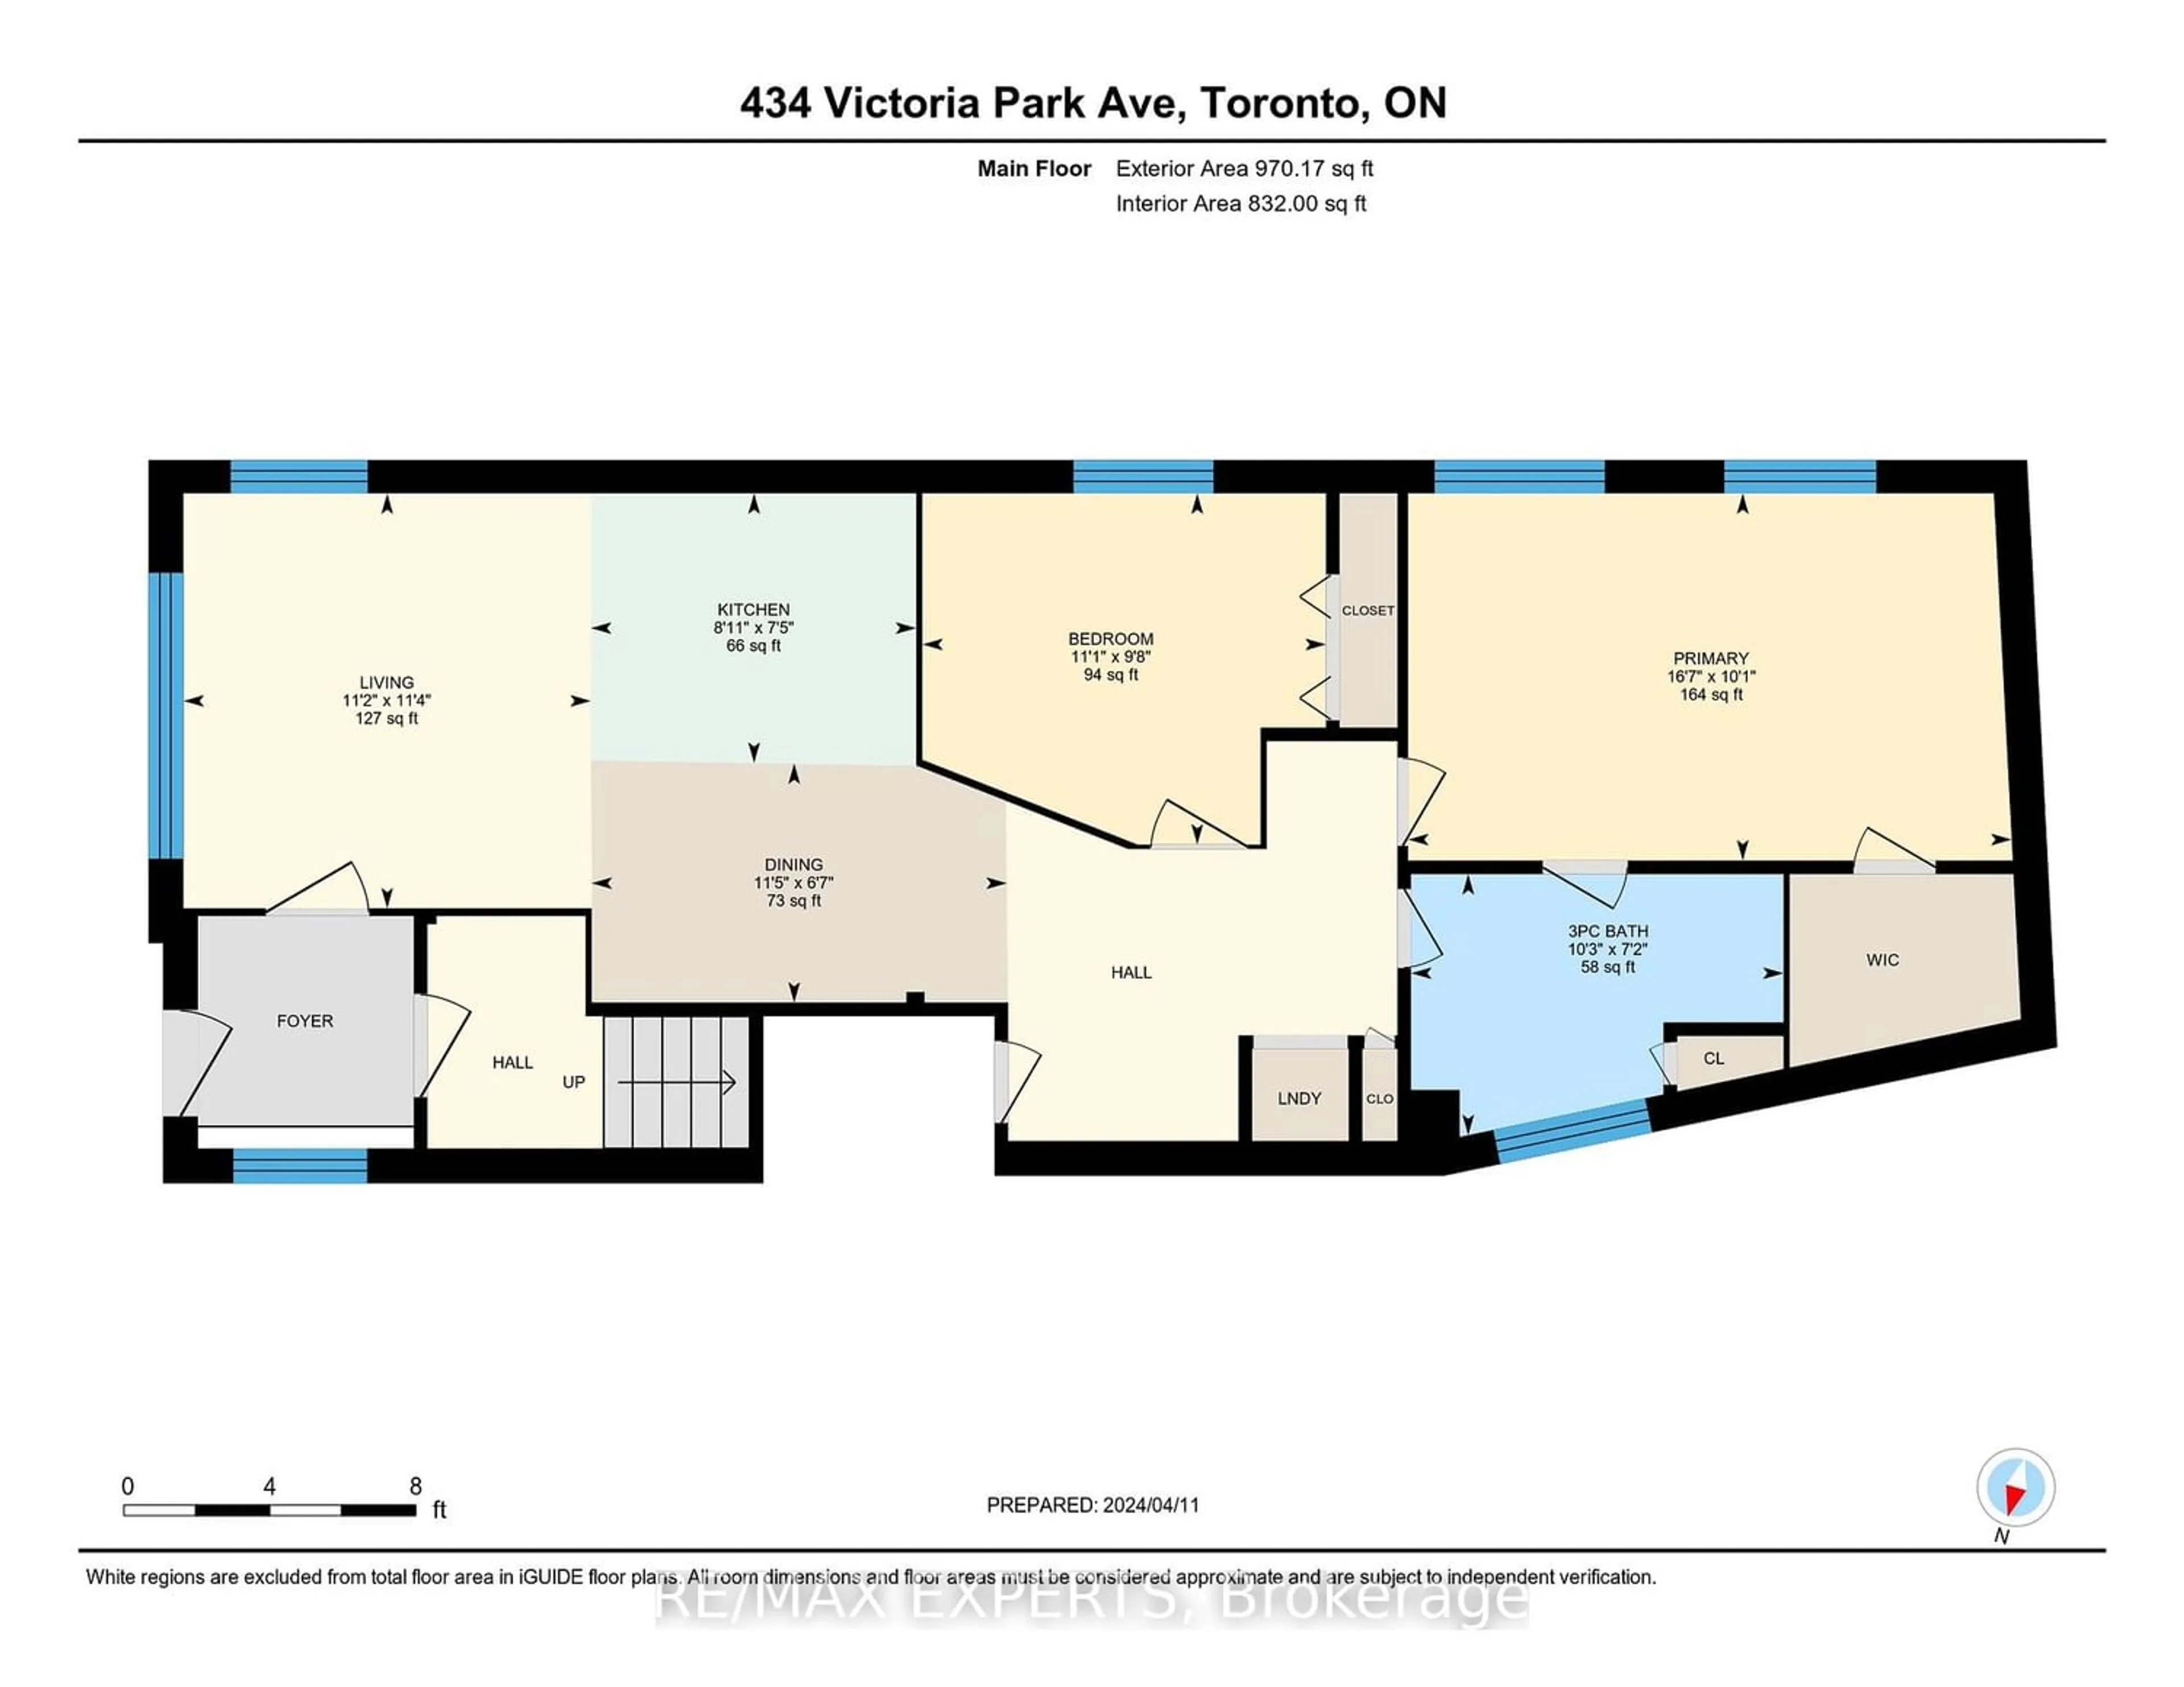 Floor plan for 434 Victoria Park Ave, Toronto Ontario M4E 3T2